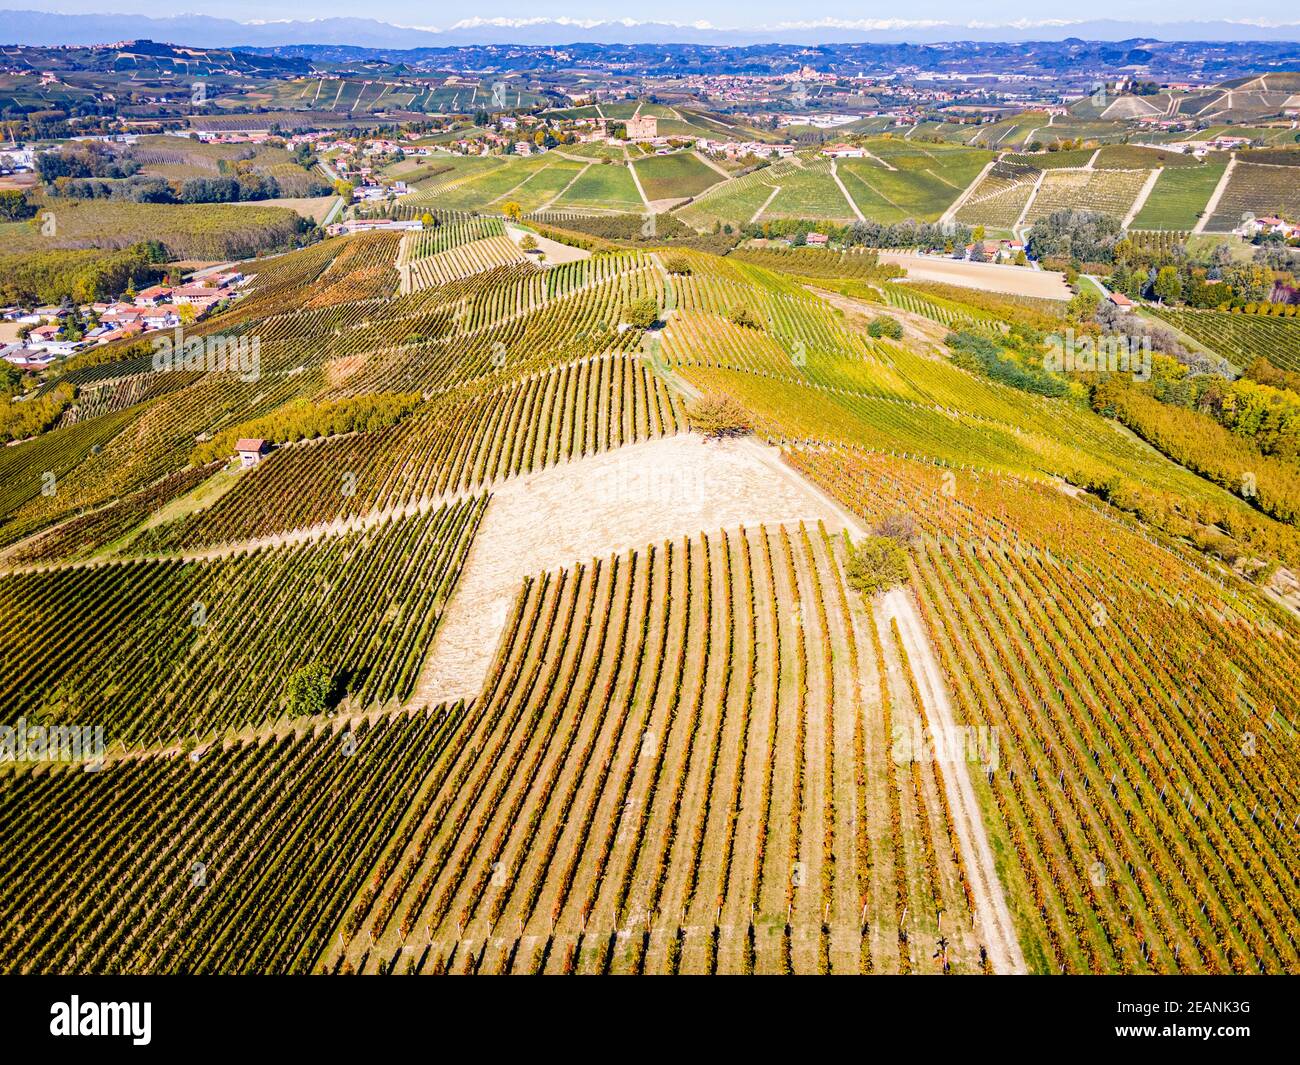 Aerial of the vineyards around Castle of Grinzane Cavour, Barolo wine region, UNESCO World Heritage Site, Piedmont, Italy, Europe Stock Photo